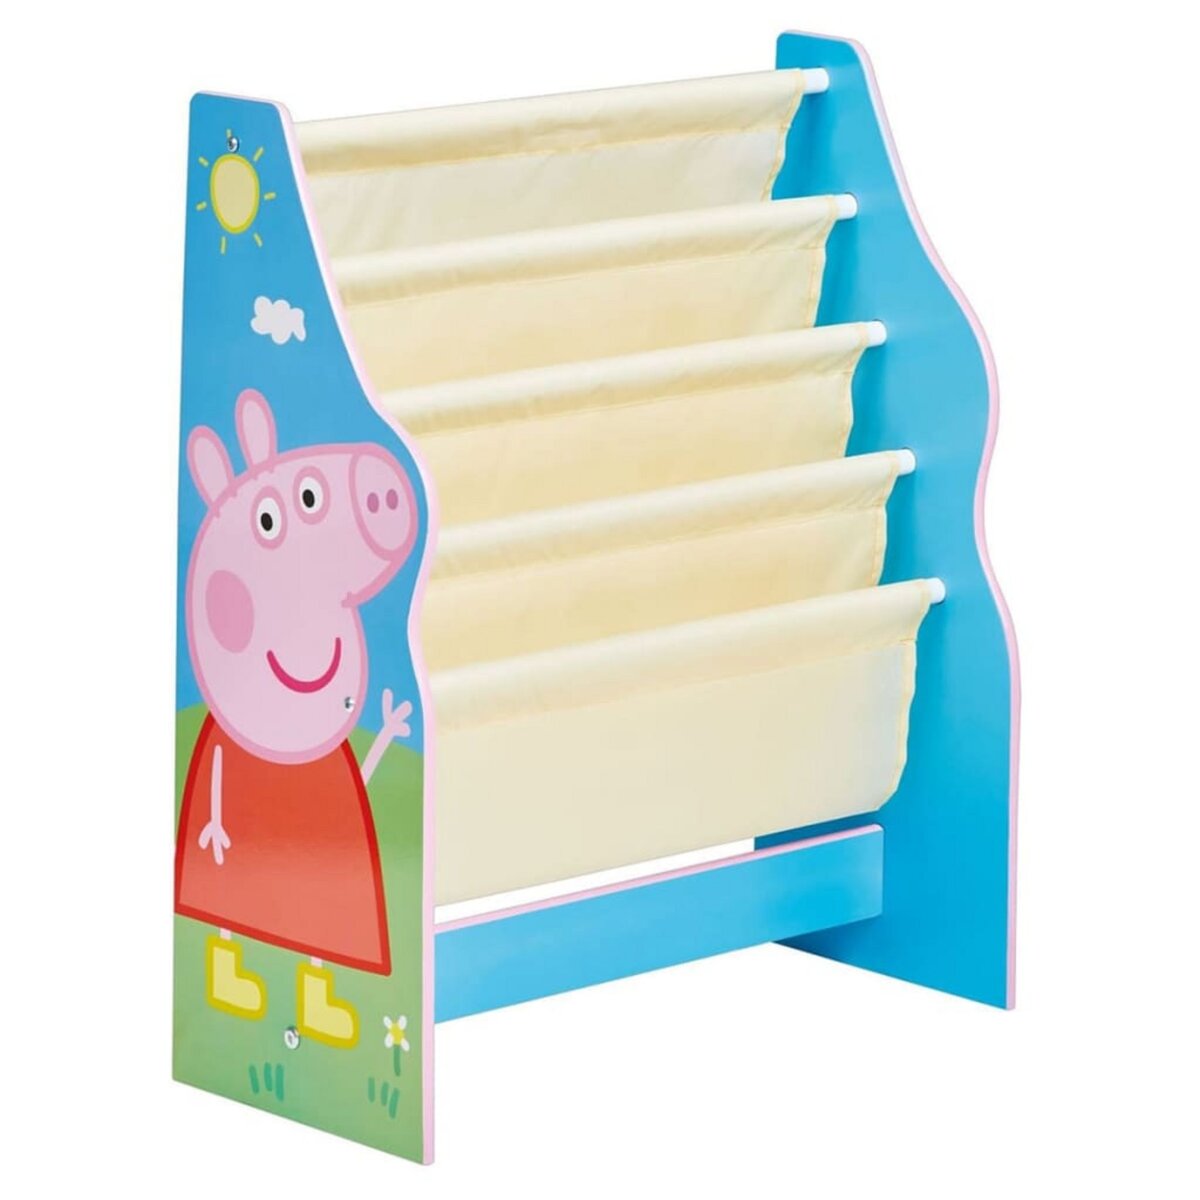 Peppa Pig Peppa Pig Bibliotheque pour enfants 51x23x60 cm Bleu WORL213012